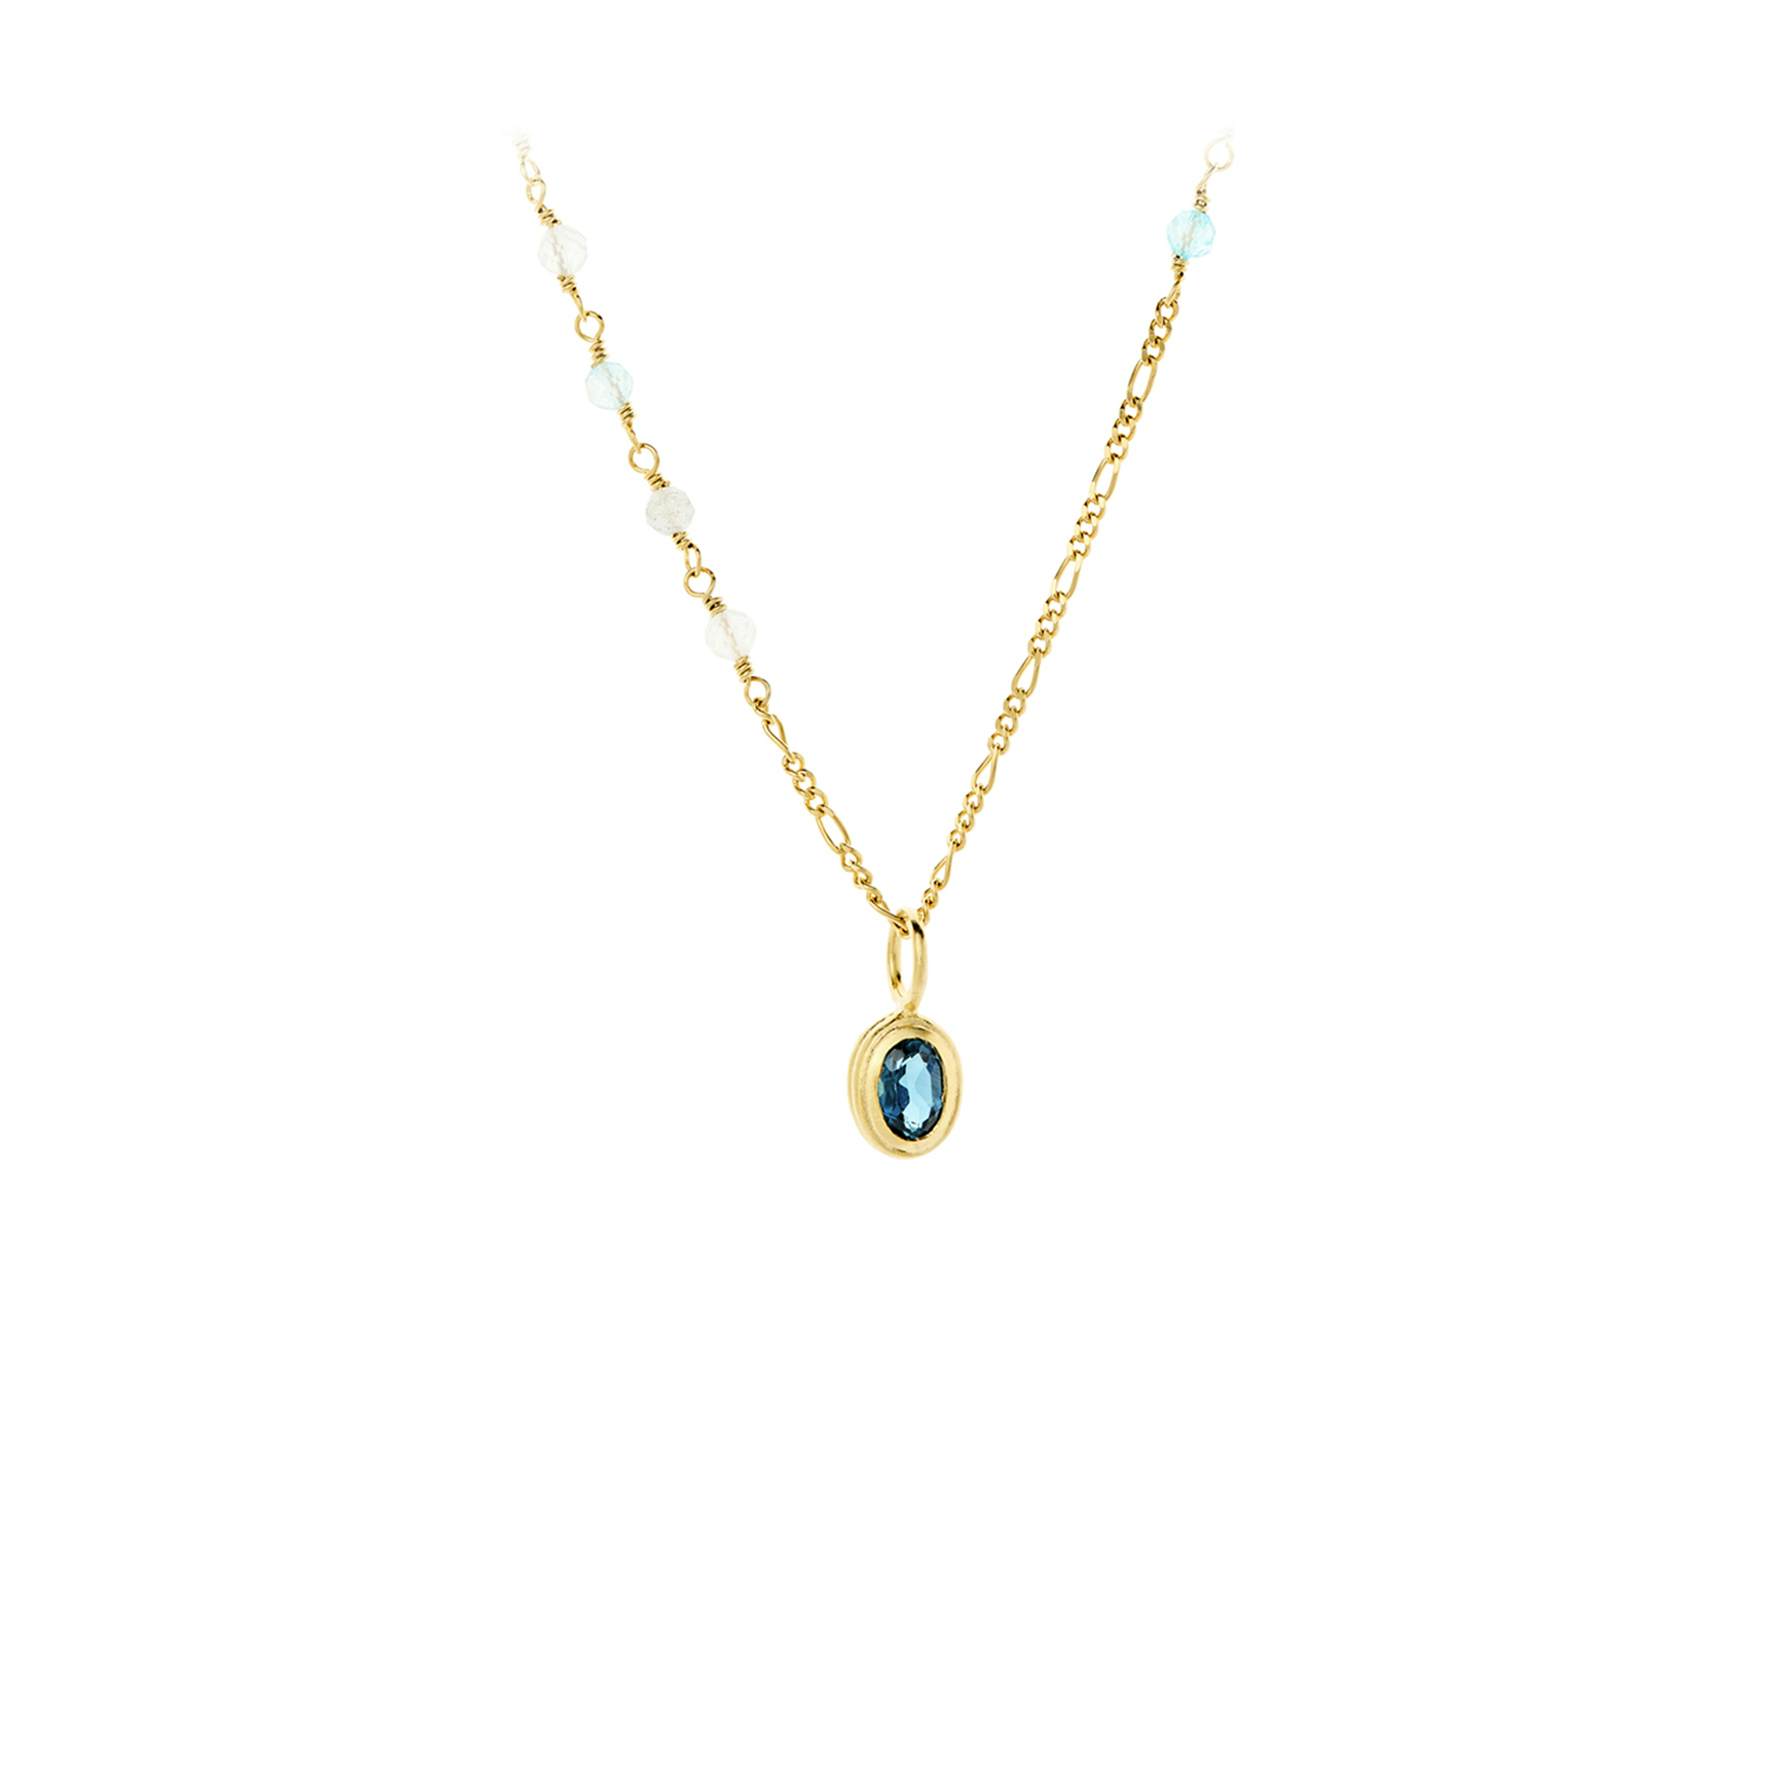 Hellir Blue Ice Necklace von Pernille Corydon in Vergoldet-Silber Sterling 925